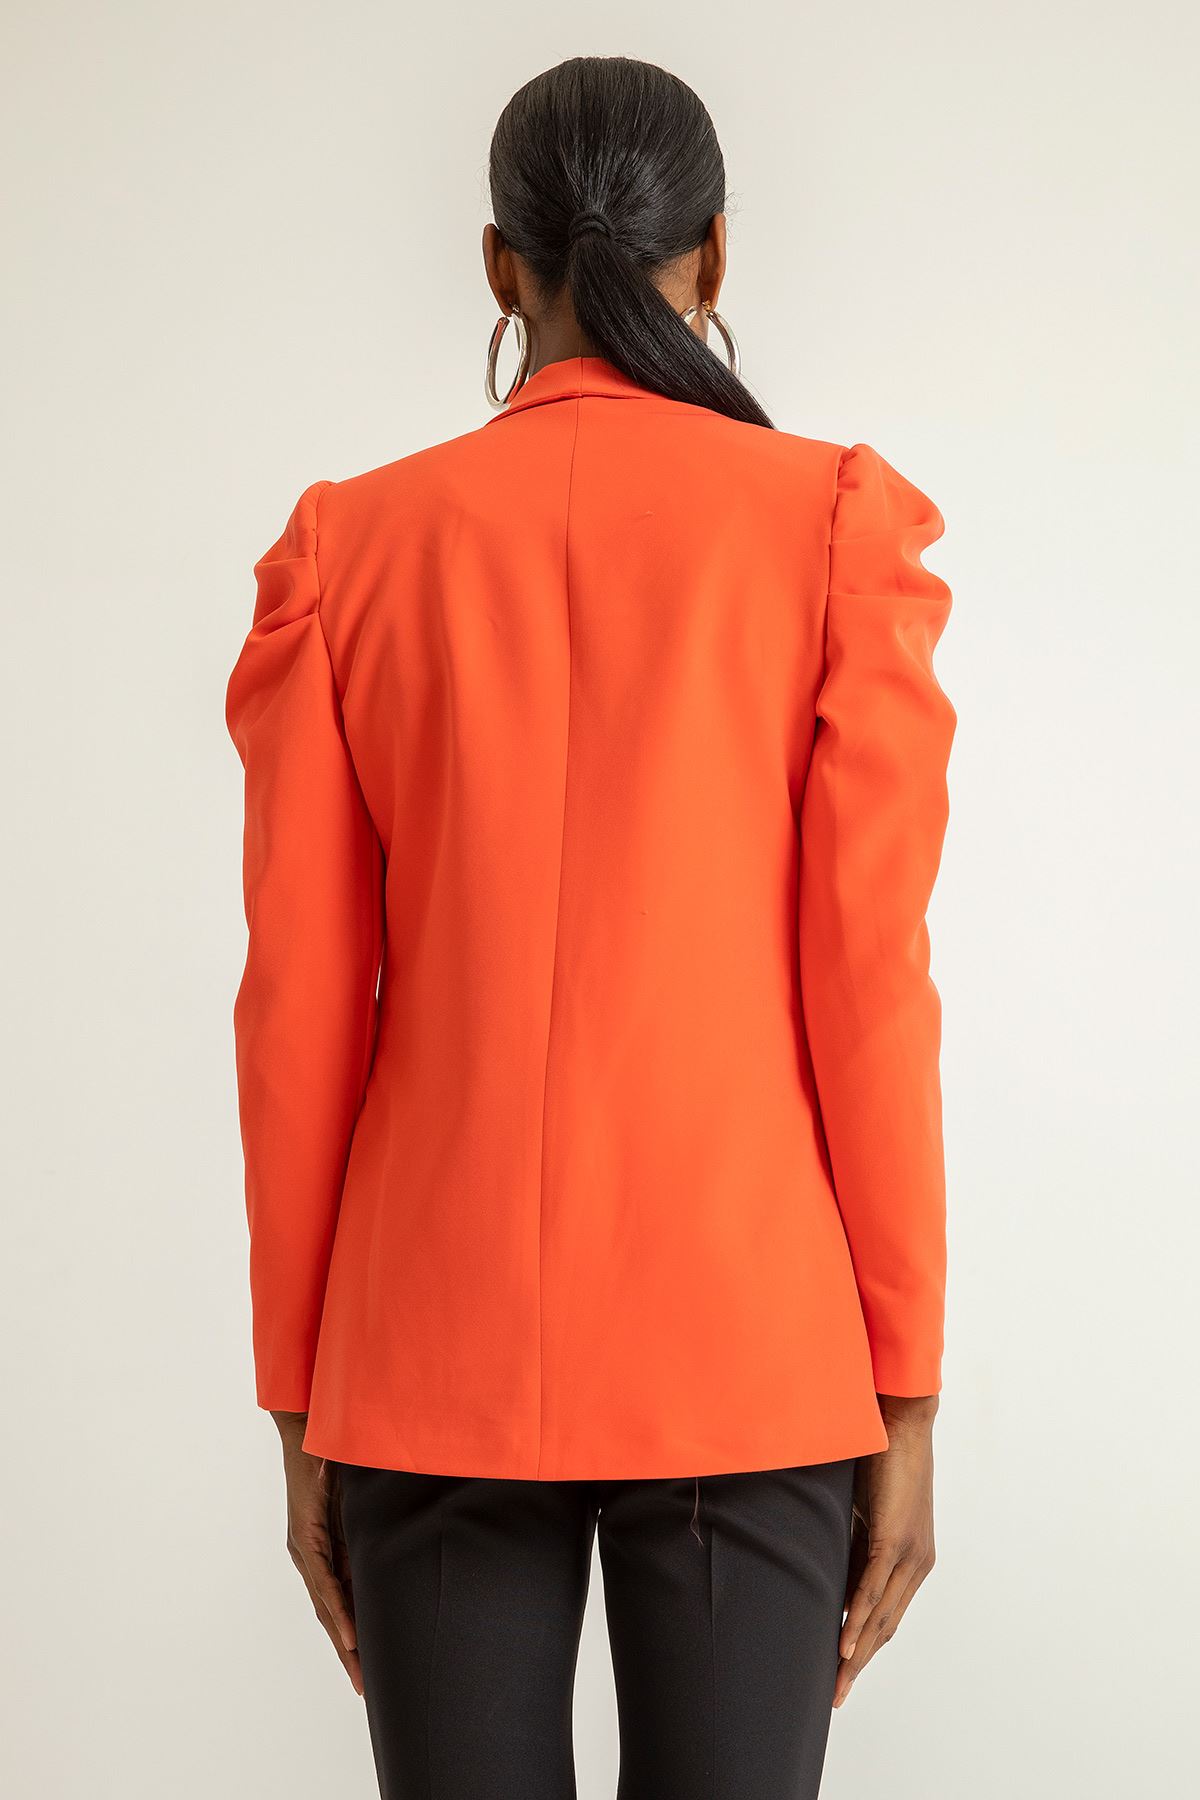 Atlas Fabric Long Sleeve Shawl Collar Below Hip Classical Ruffled Women Jacket - Coral